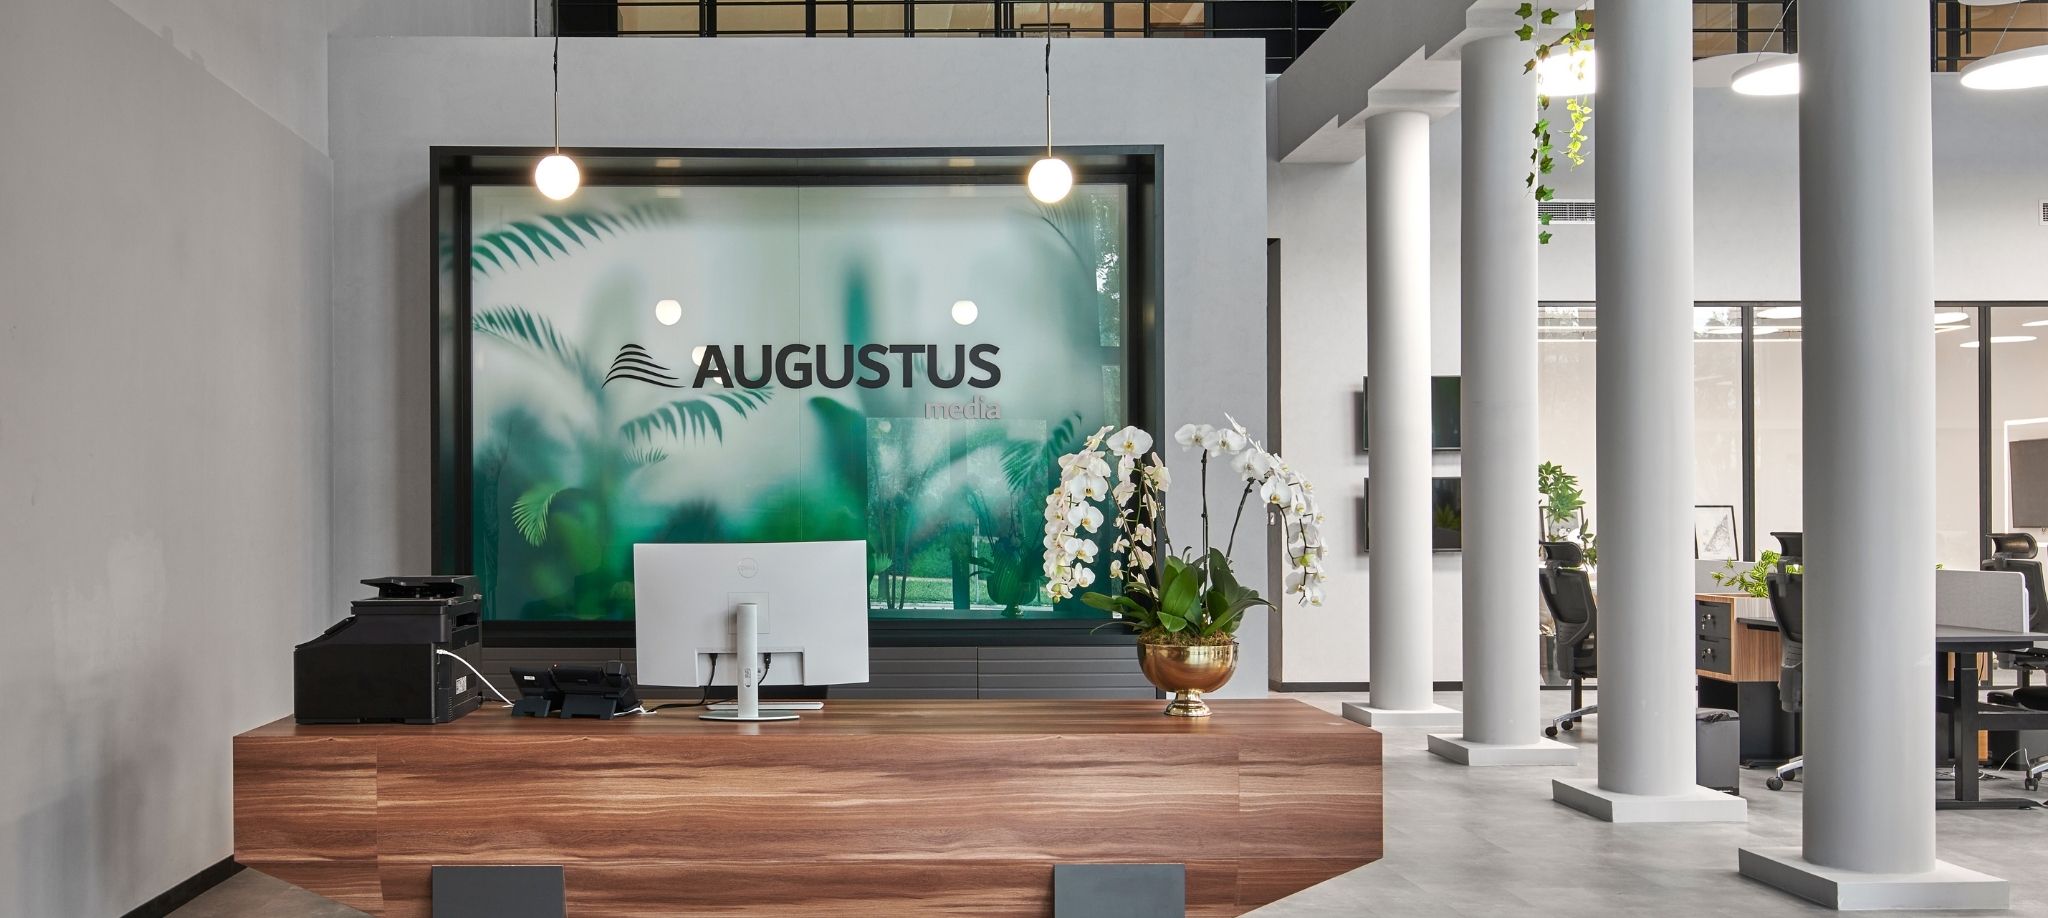 Augustus Media office in Dubai Design and build by Motif Interiors